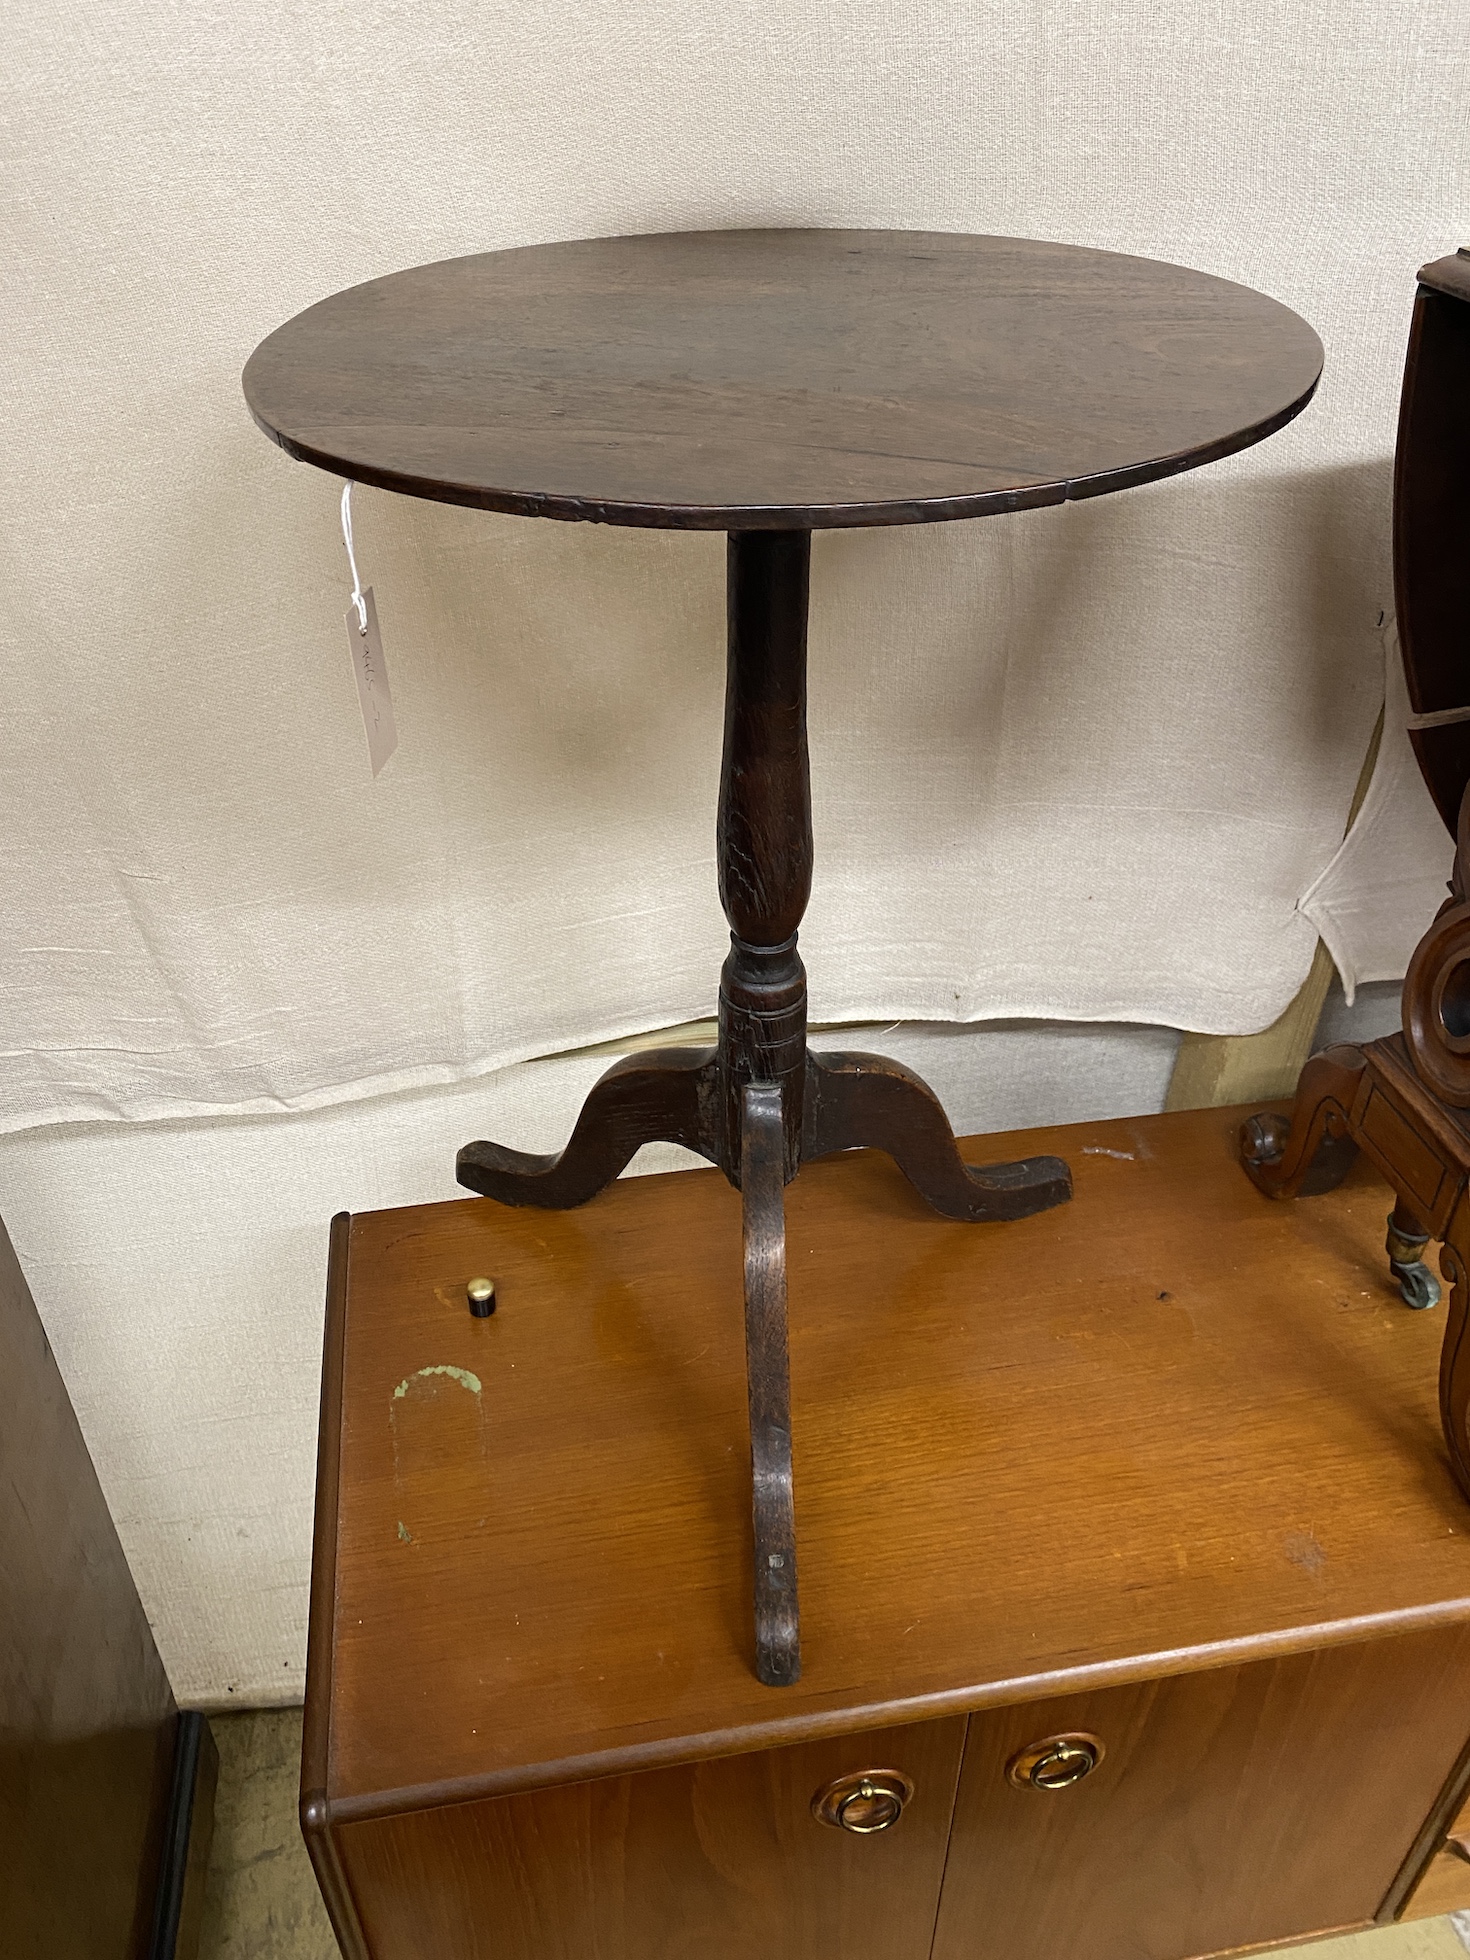 A George III provincial circular oak tripod tea table, diameter 48cm, height 66cm